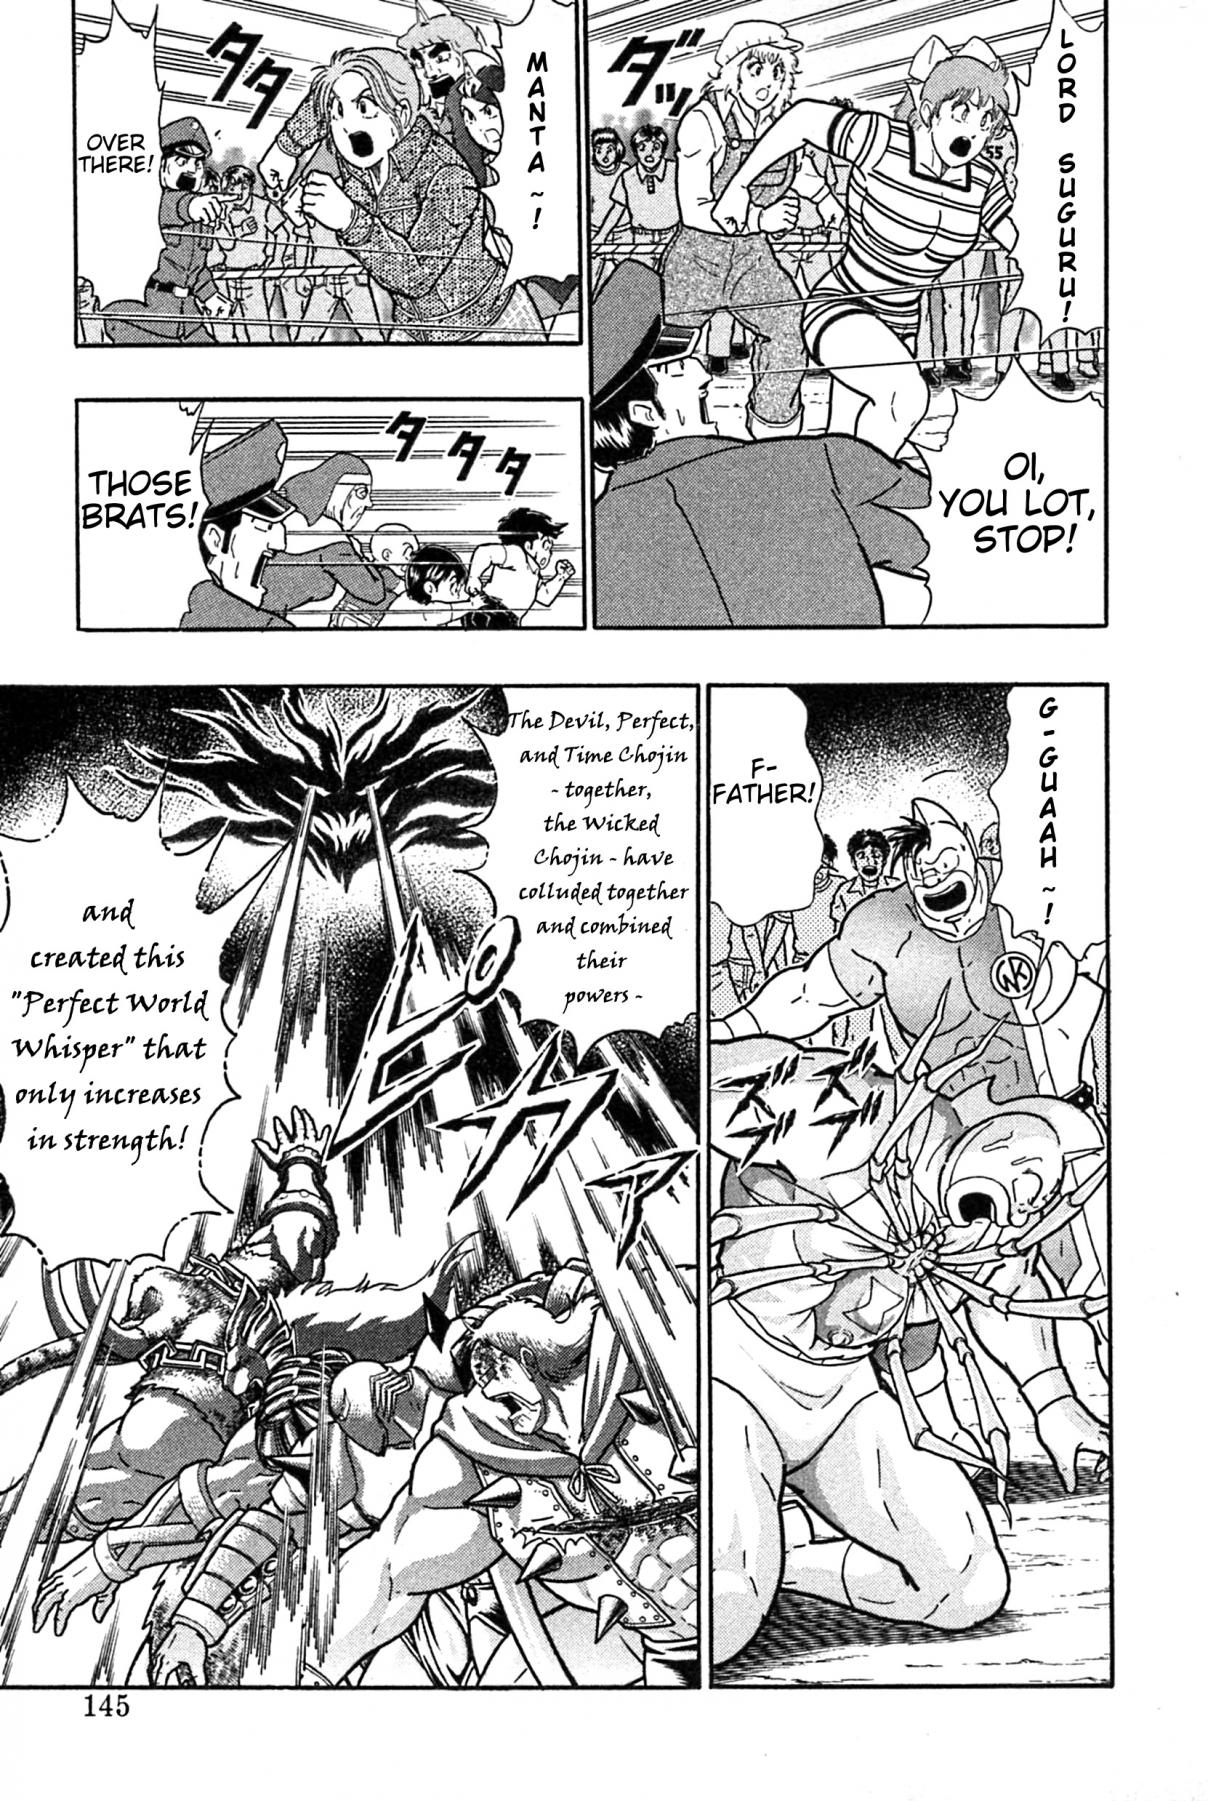 Kinnikuman II Sei: Kyuukyoku Choujin Tag Hen Vol. 17 Ch. 185 Timed Apparatus of Death!